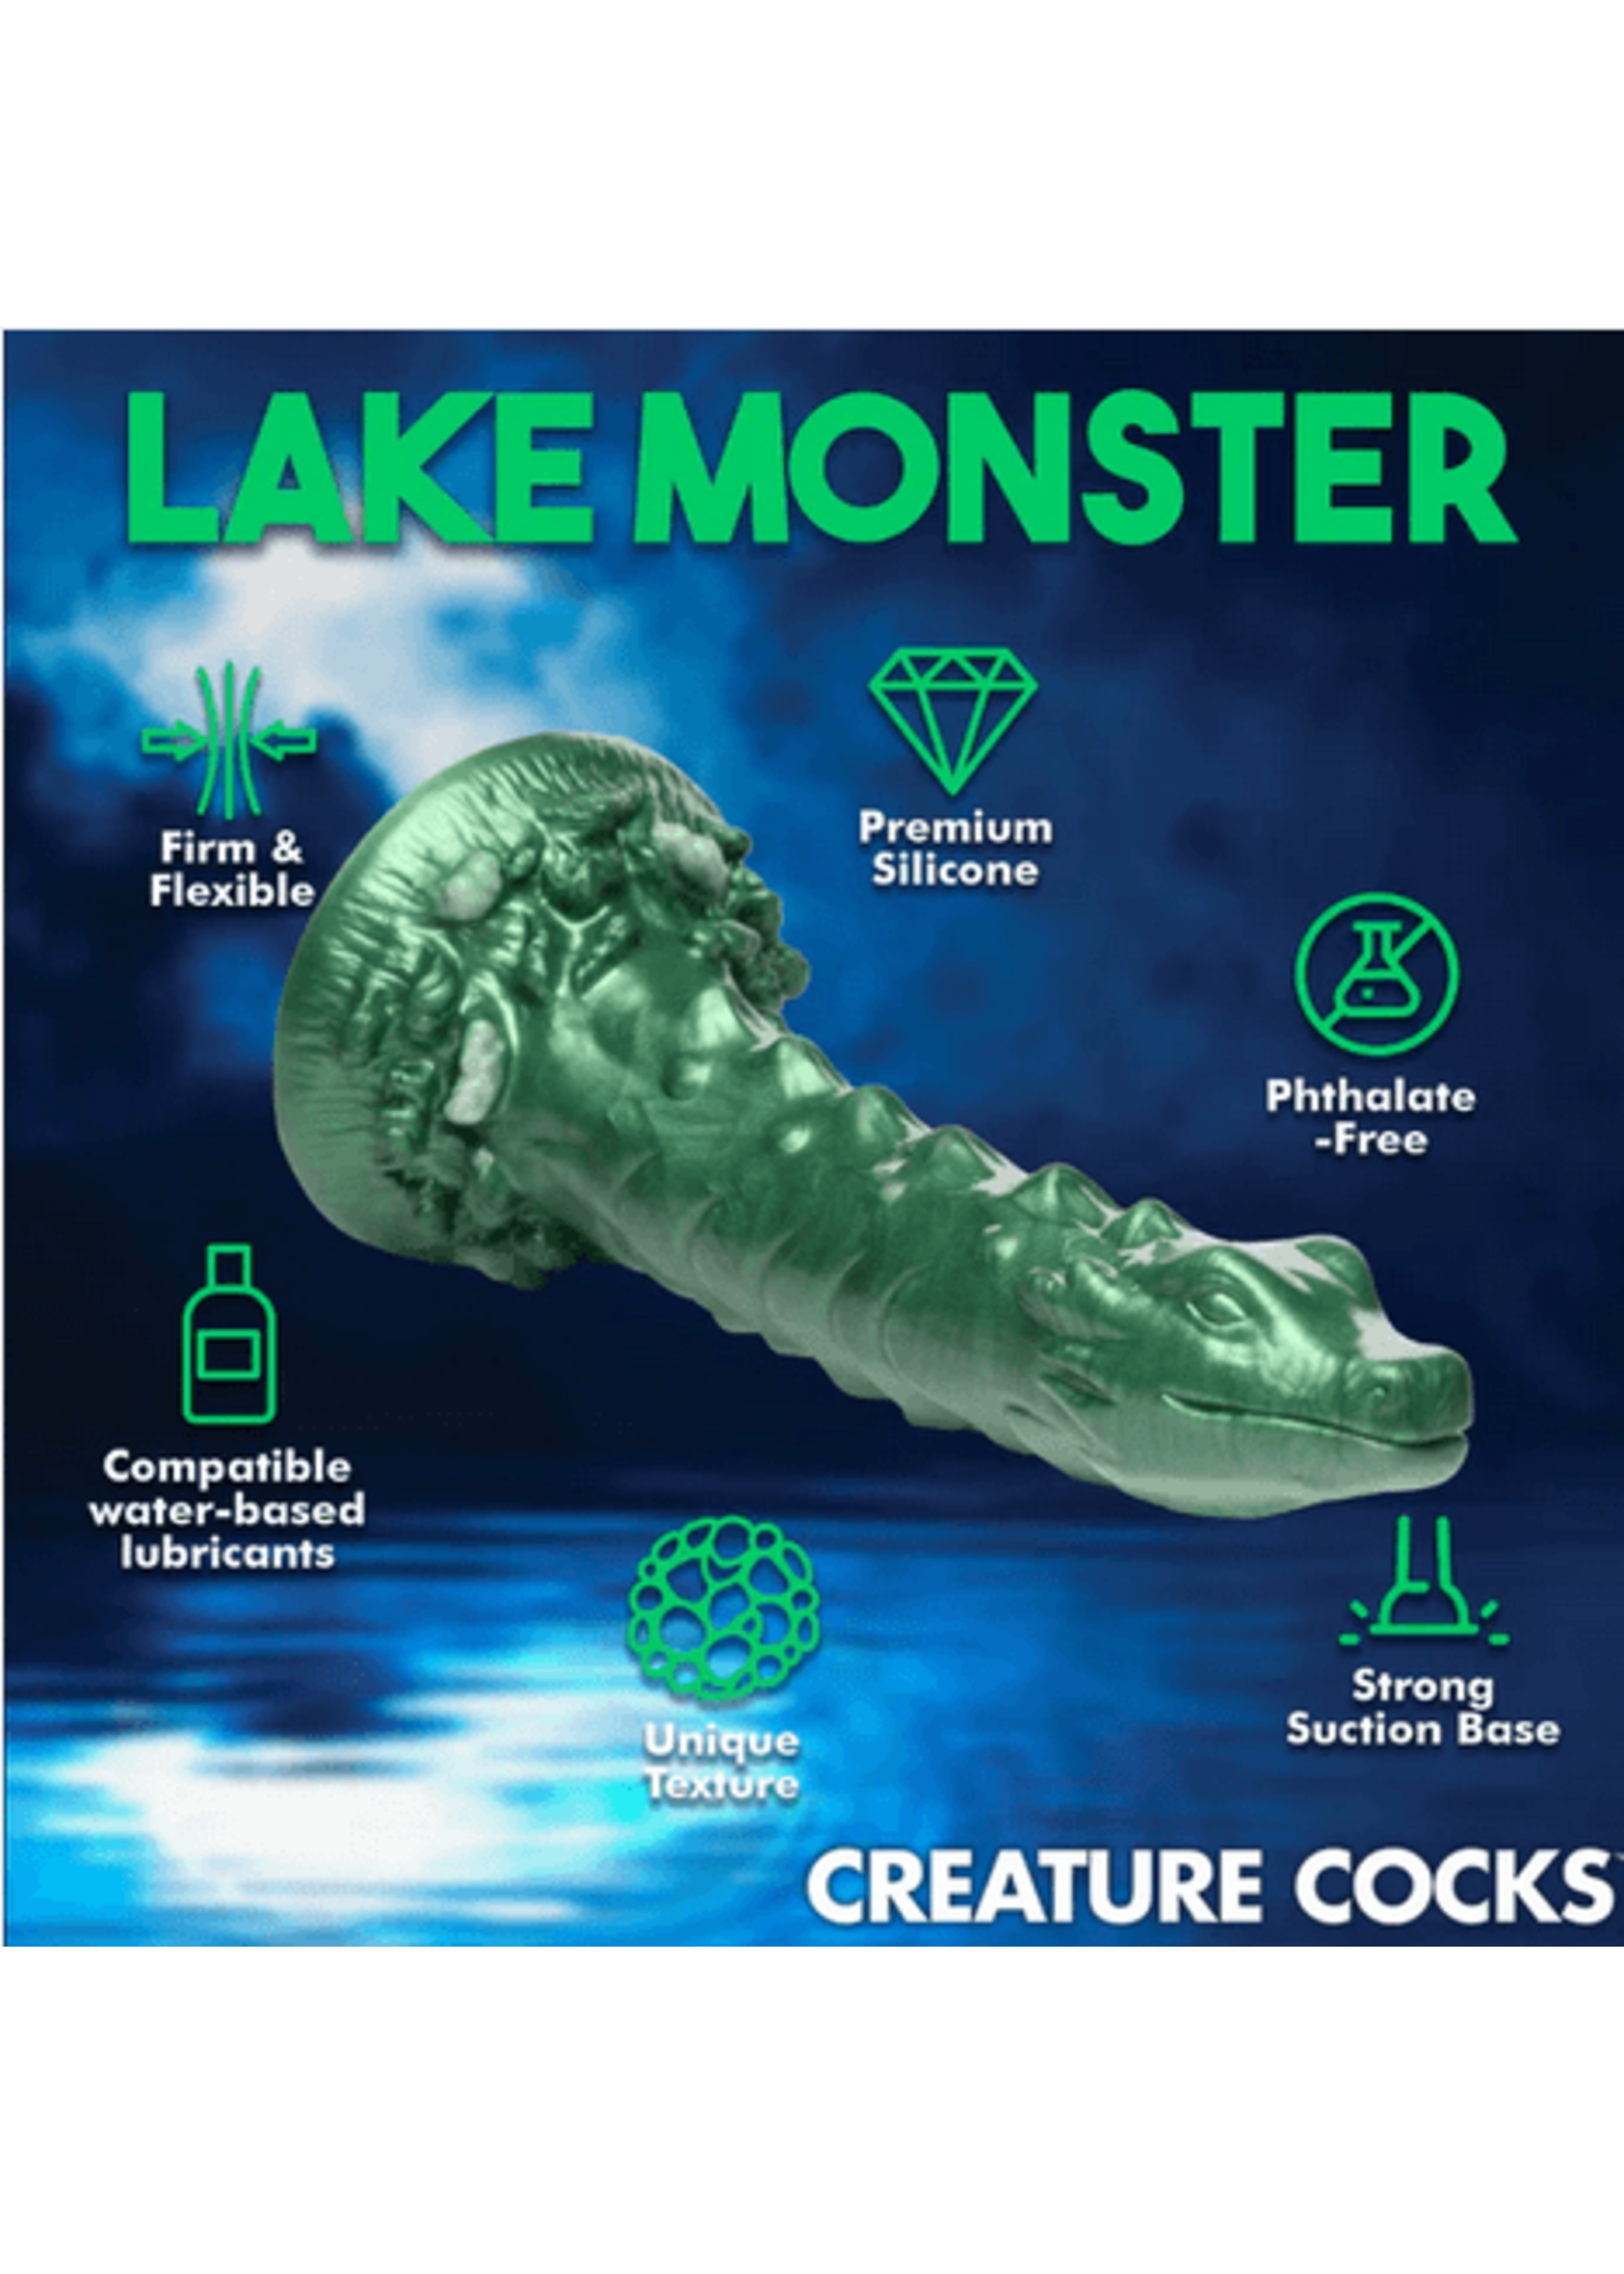 Creature Cocks Cockness Monster Lake Creature Silicone